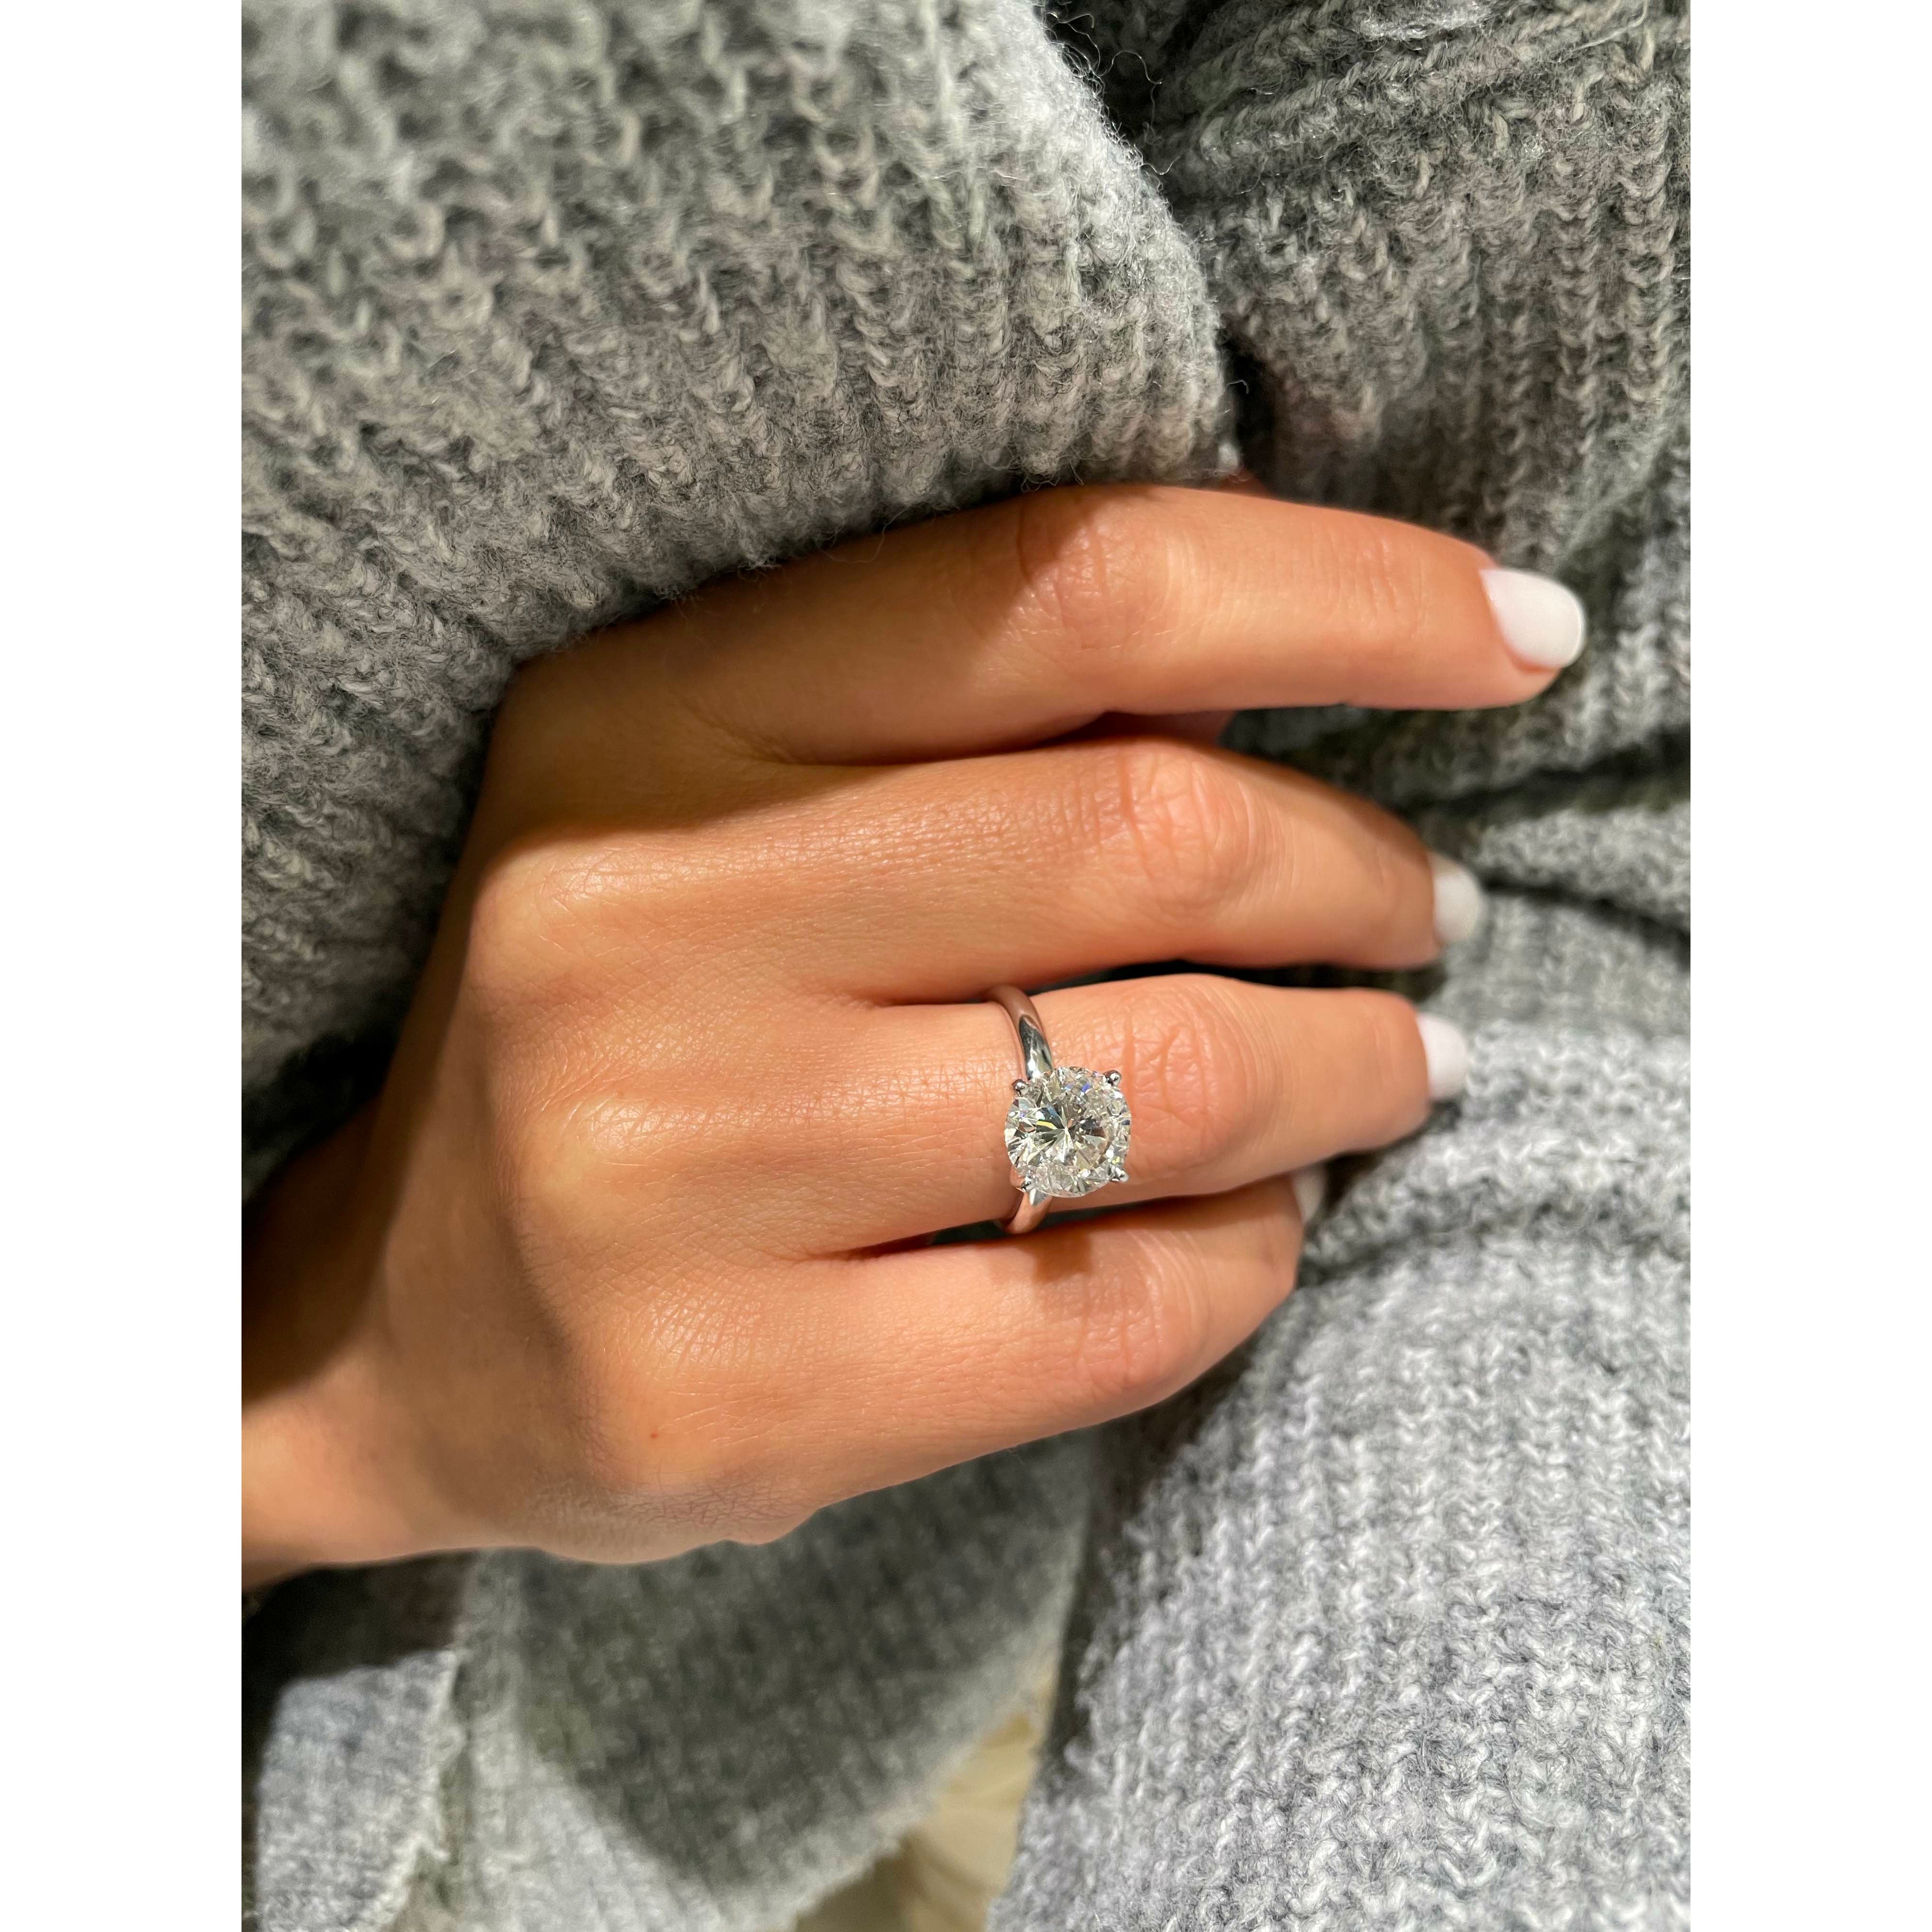 Jessica Lab Grown Diamond Ring   (3 Carat) -14K White Gold